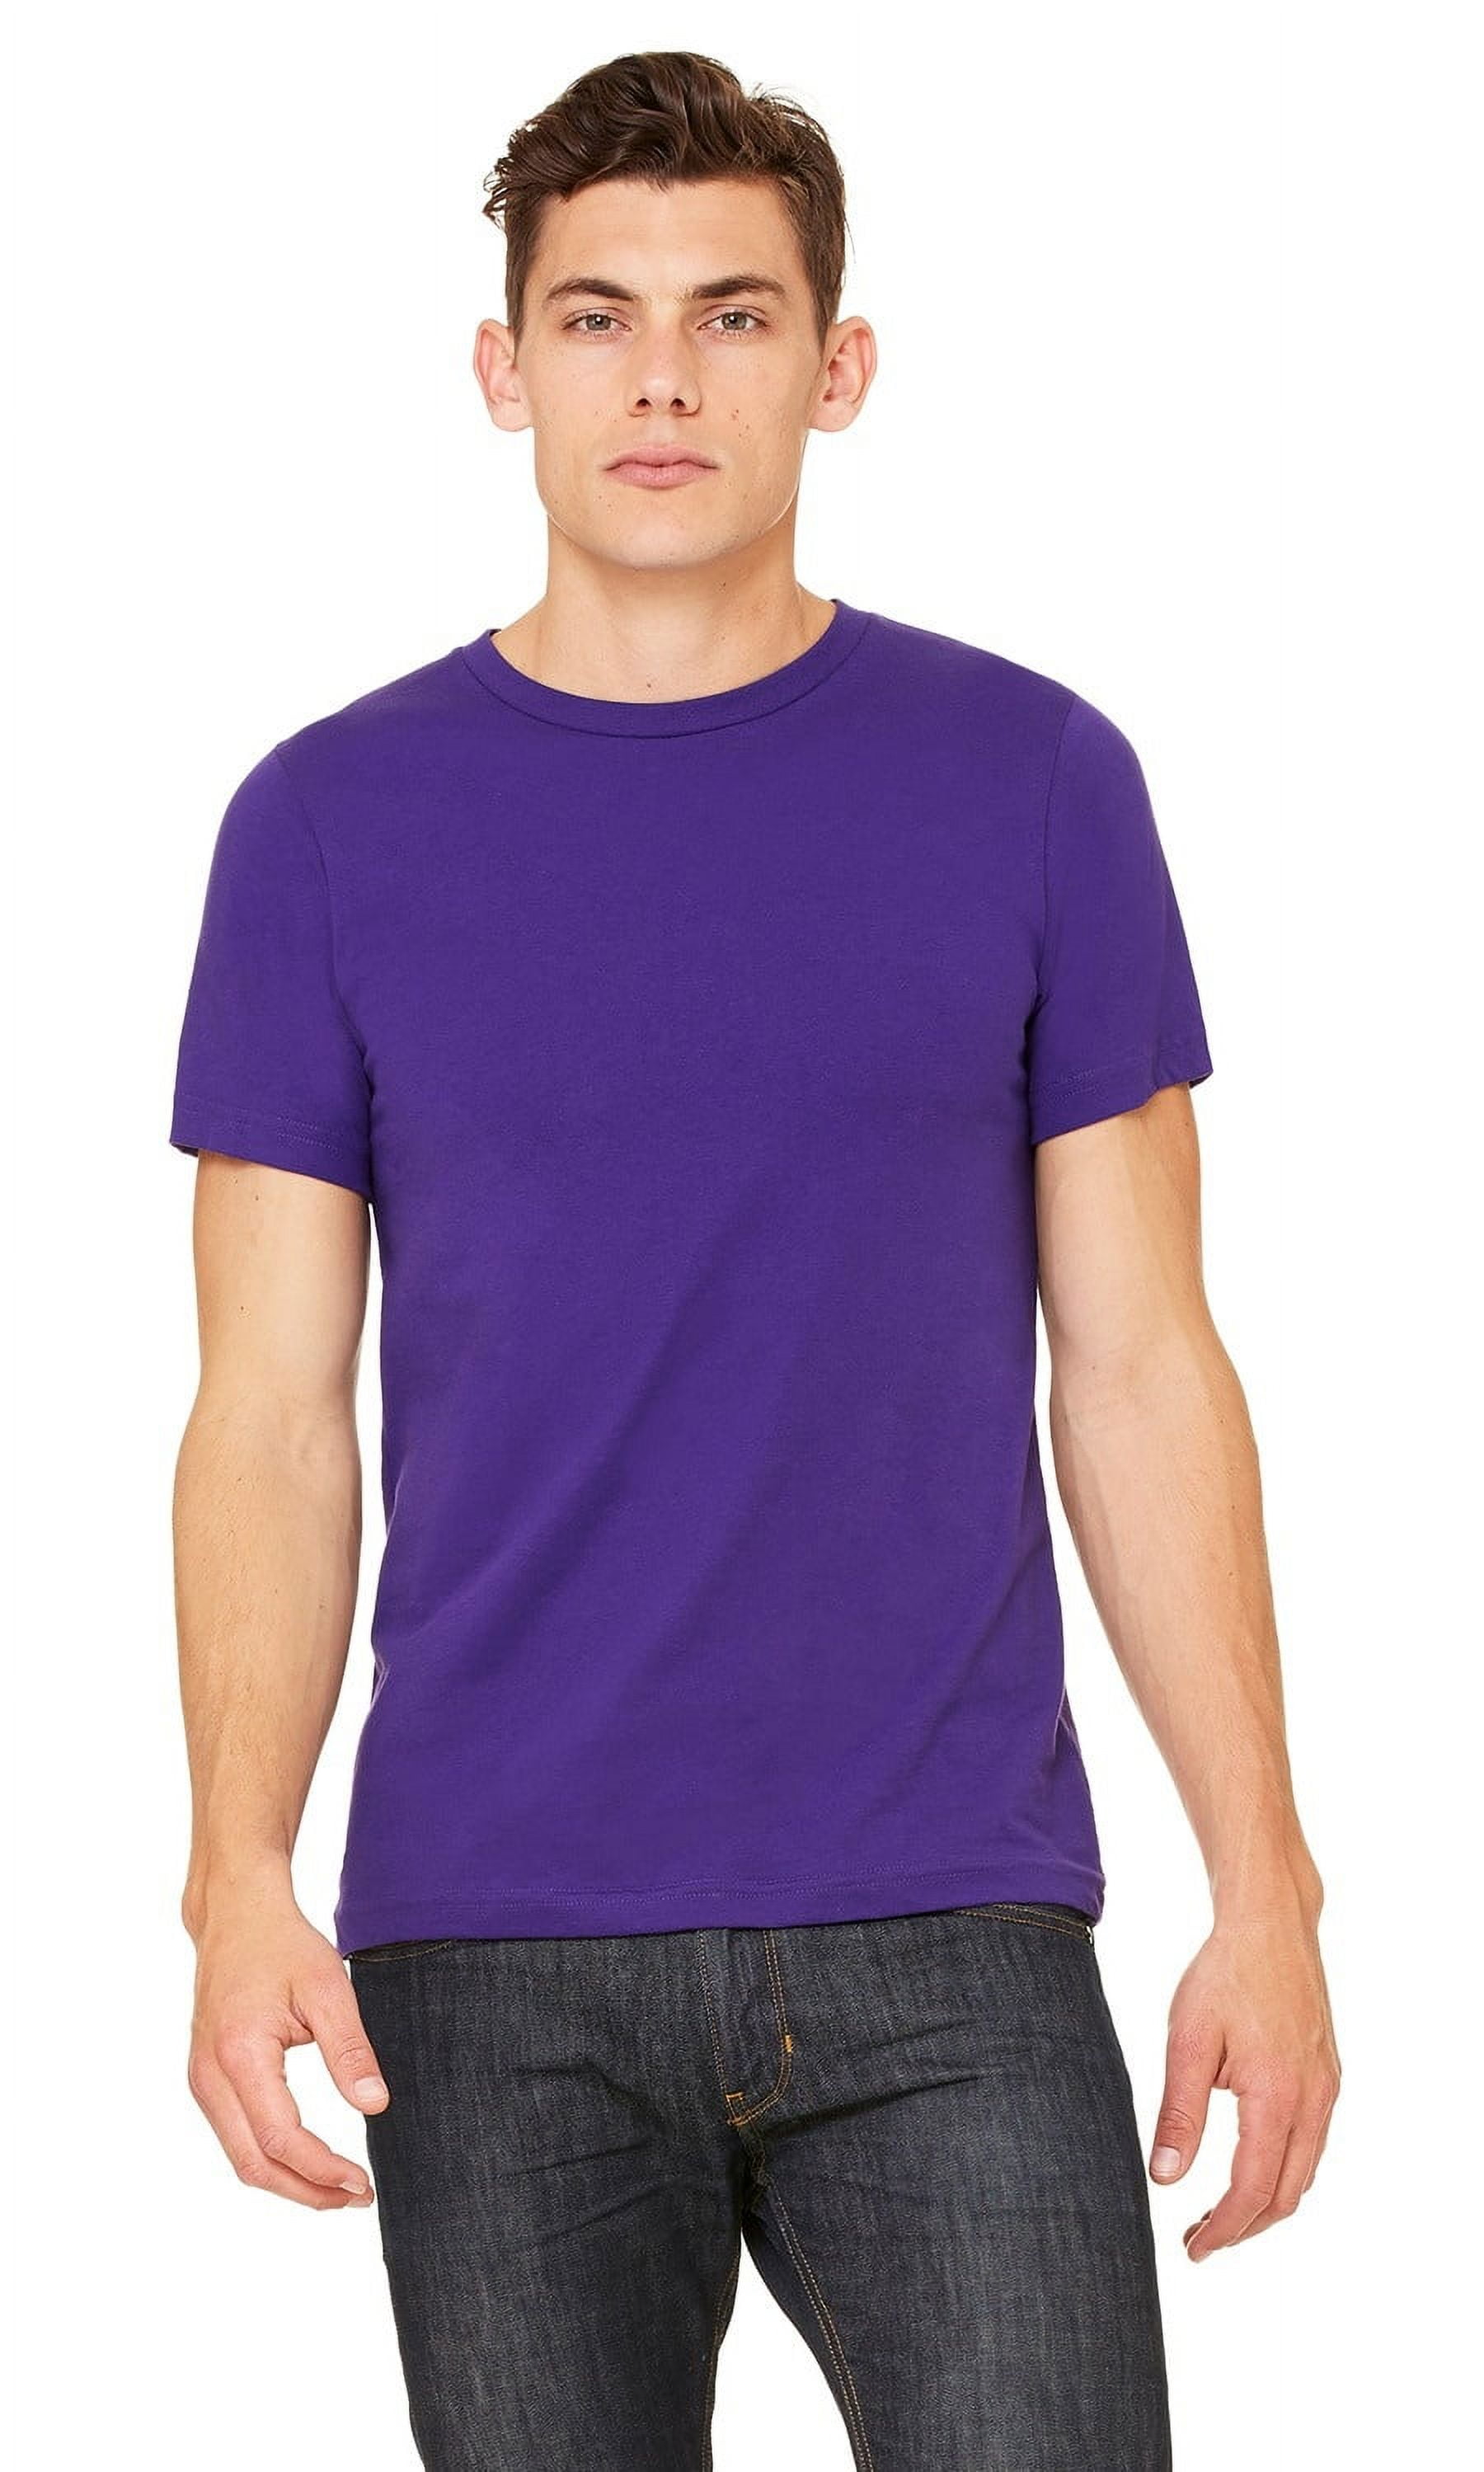 The Bella + Canvas Unisex Jersey Short Sleeve T-Shirt - TEAM